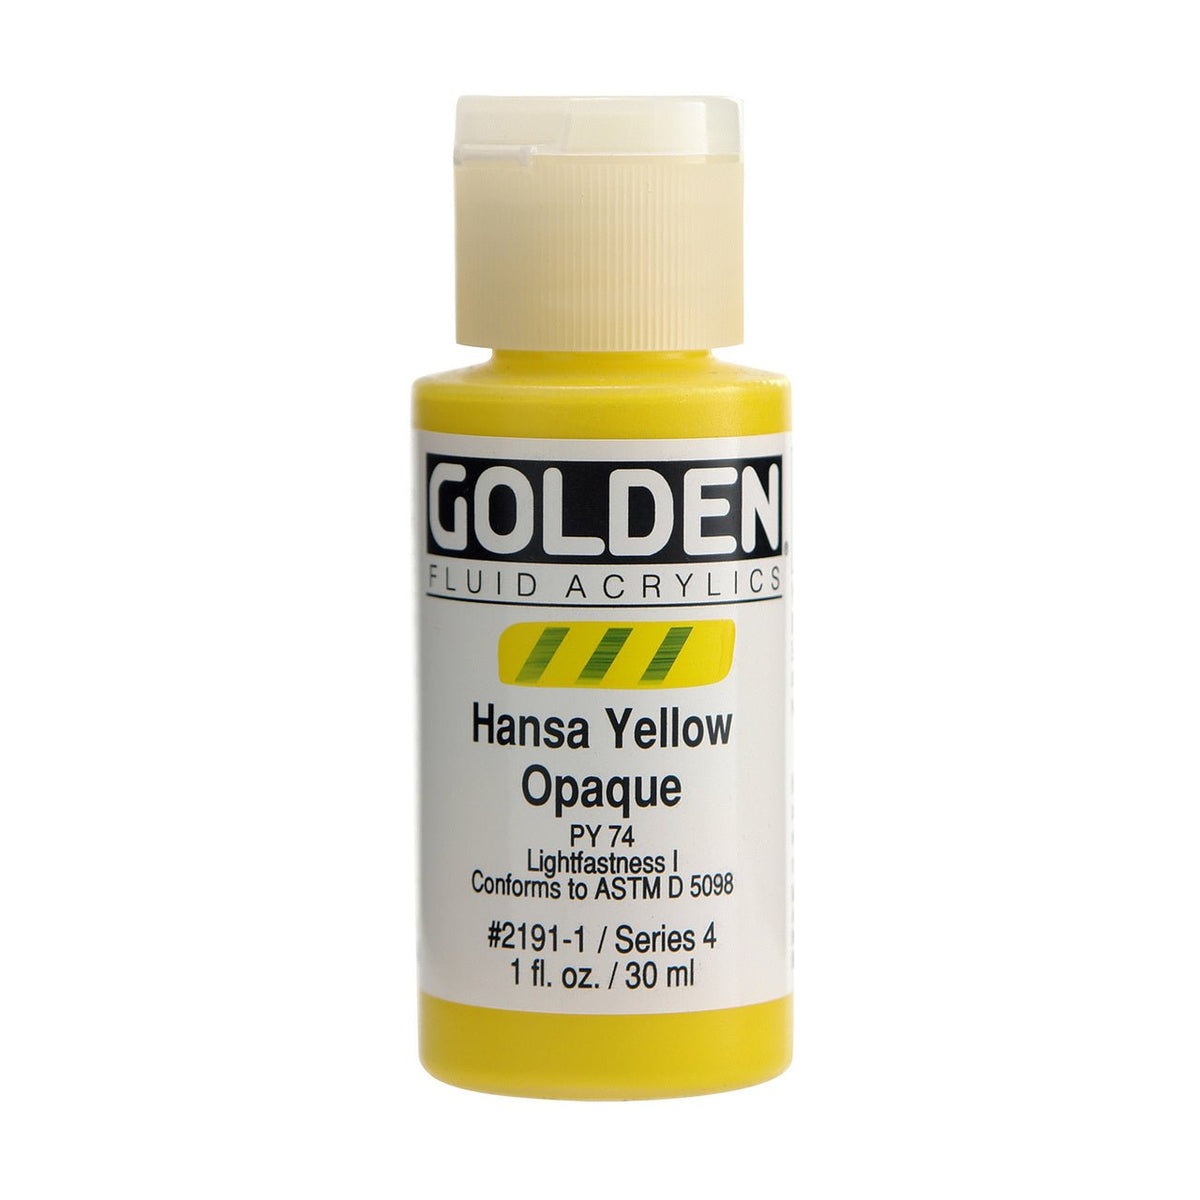 Golden Fluid Acrylic Hansa Yellow Opaque 1 oz - merriartist.com